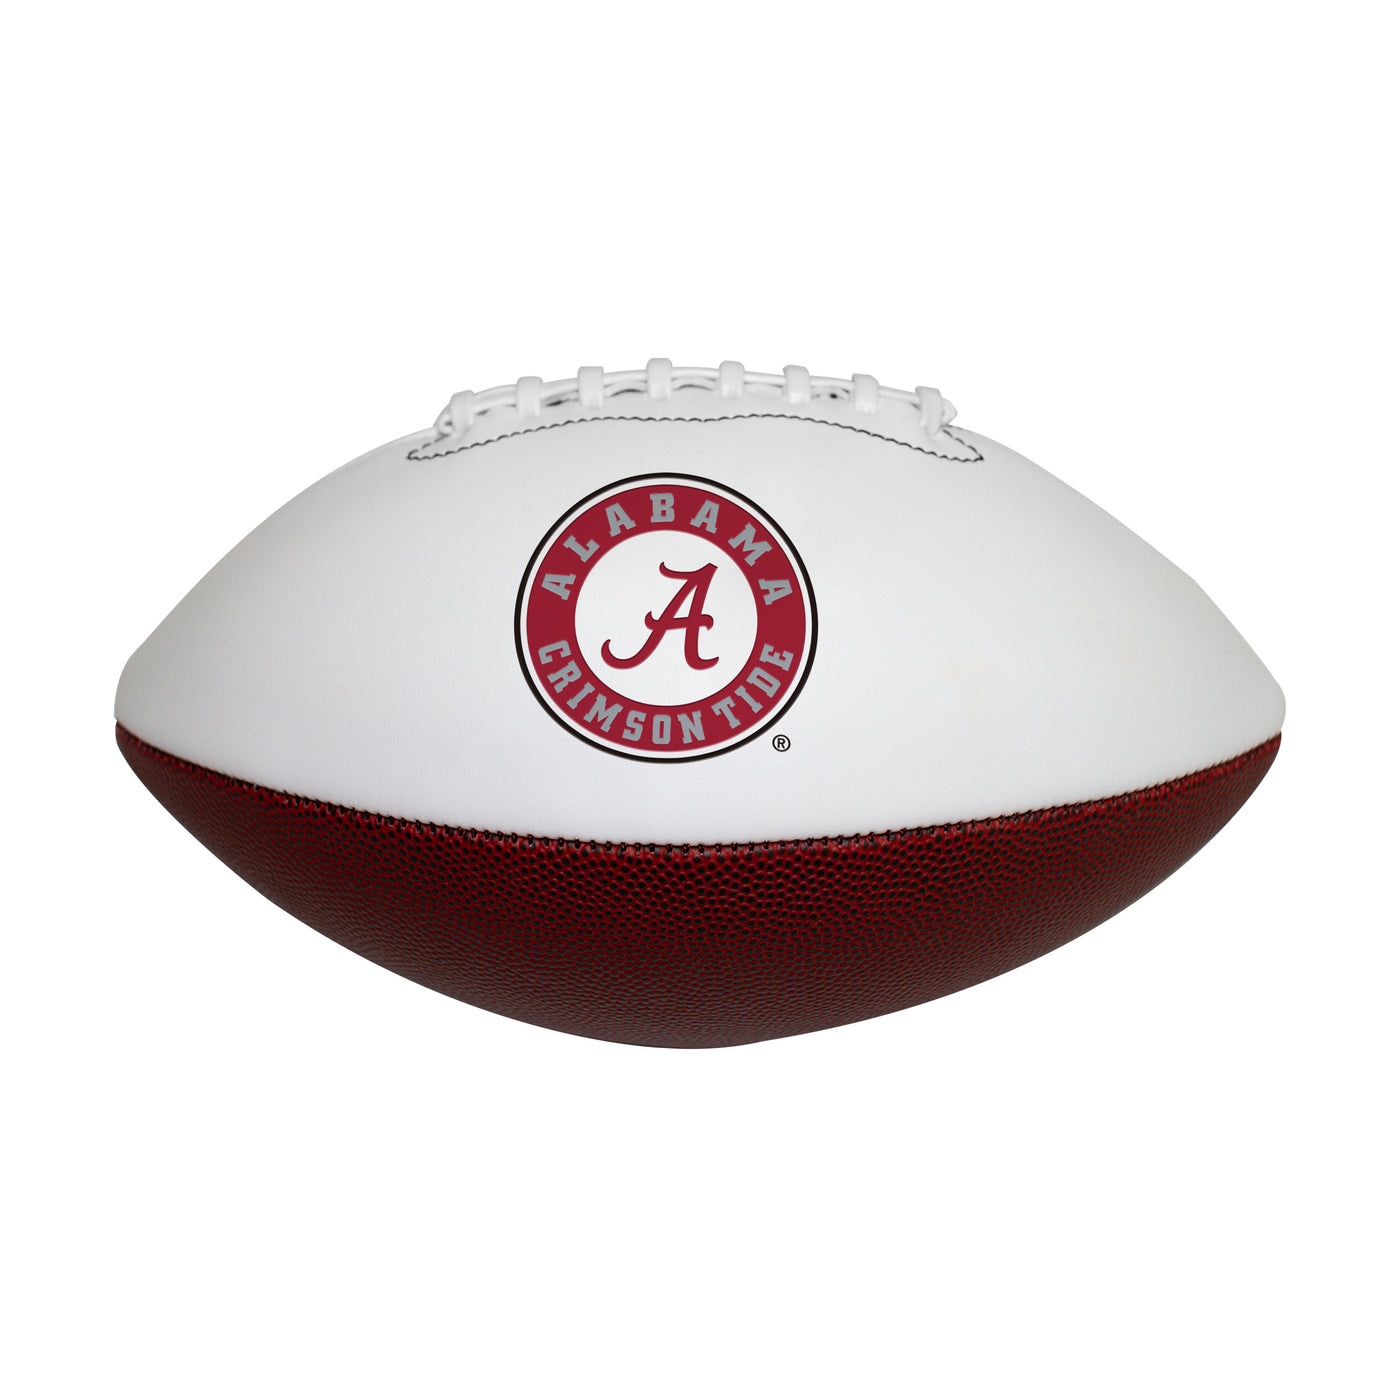 Alabama Official-Size Autograph Football